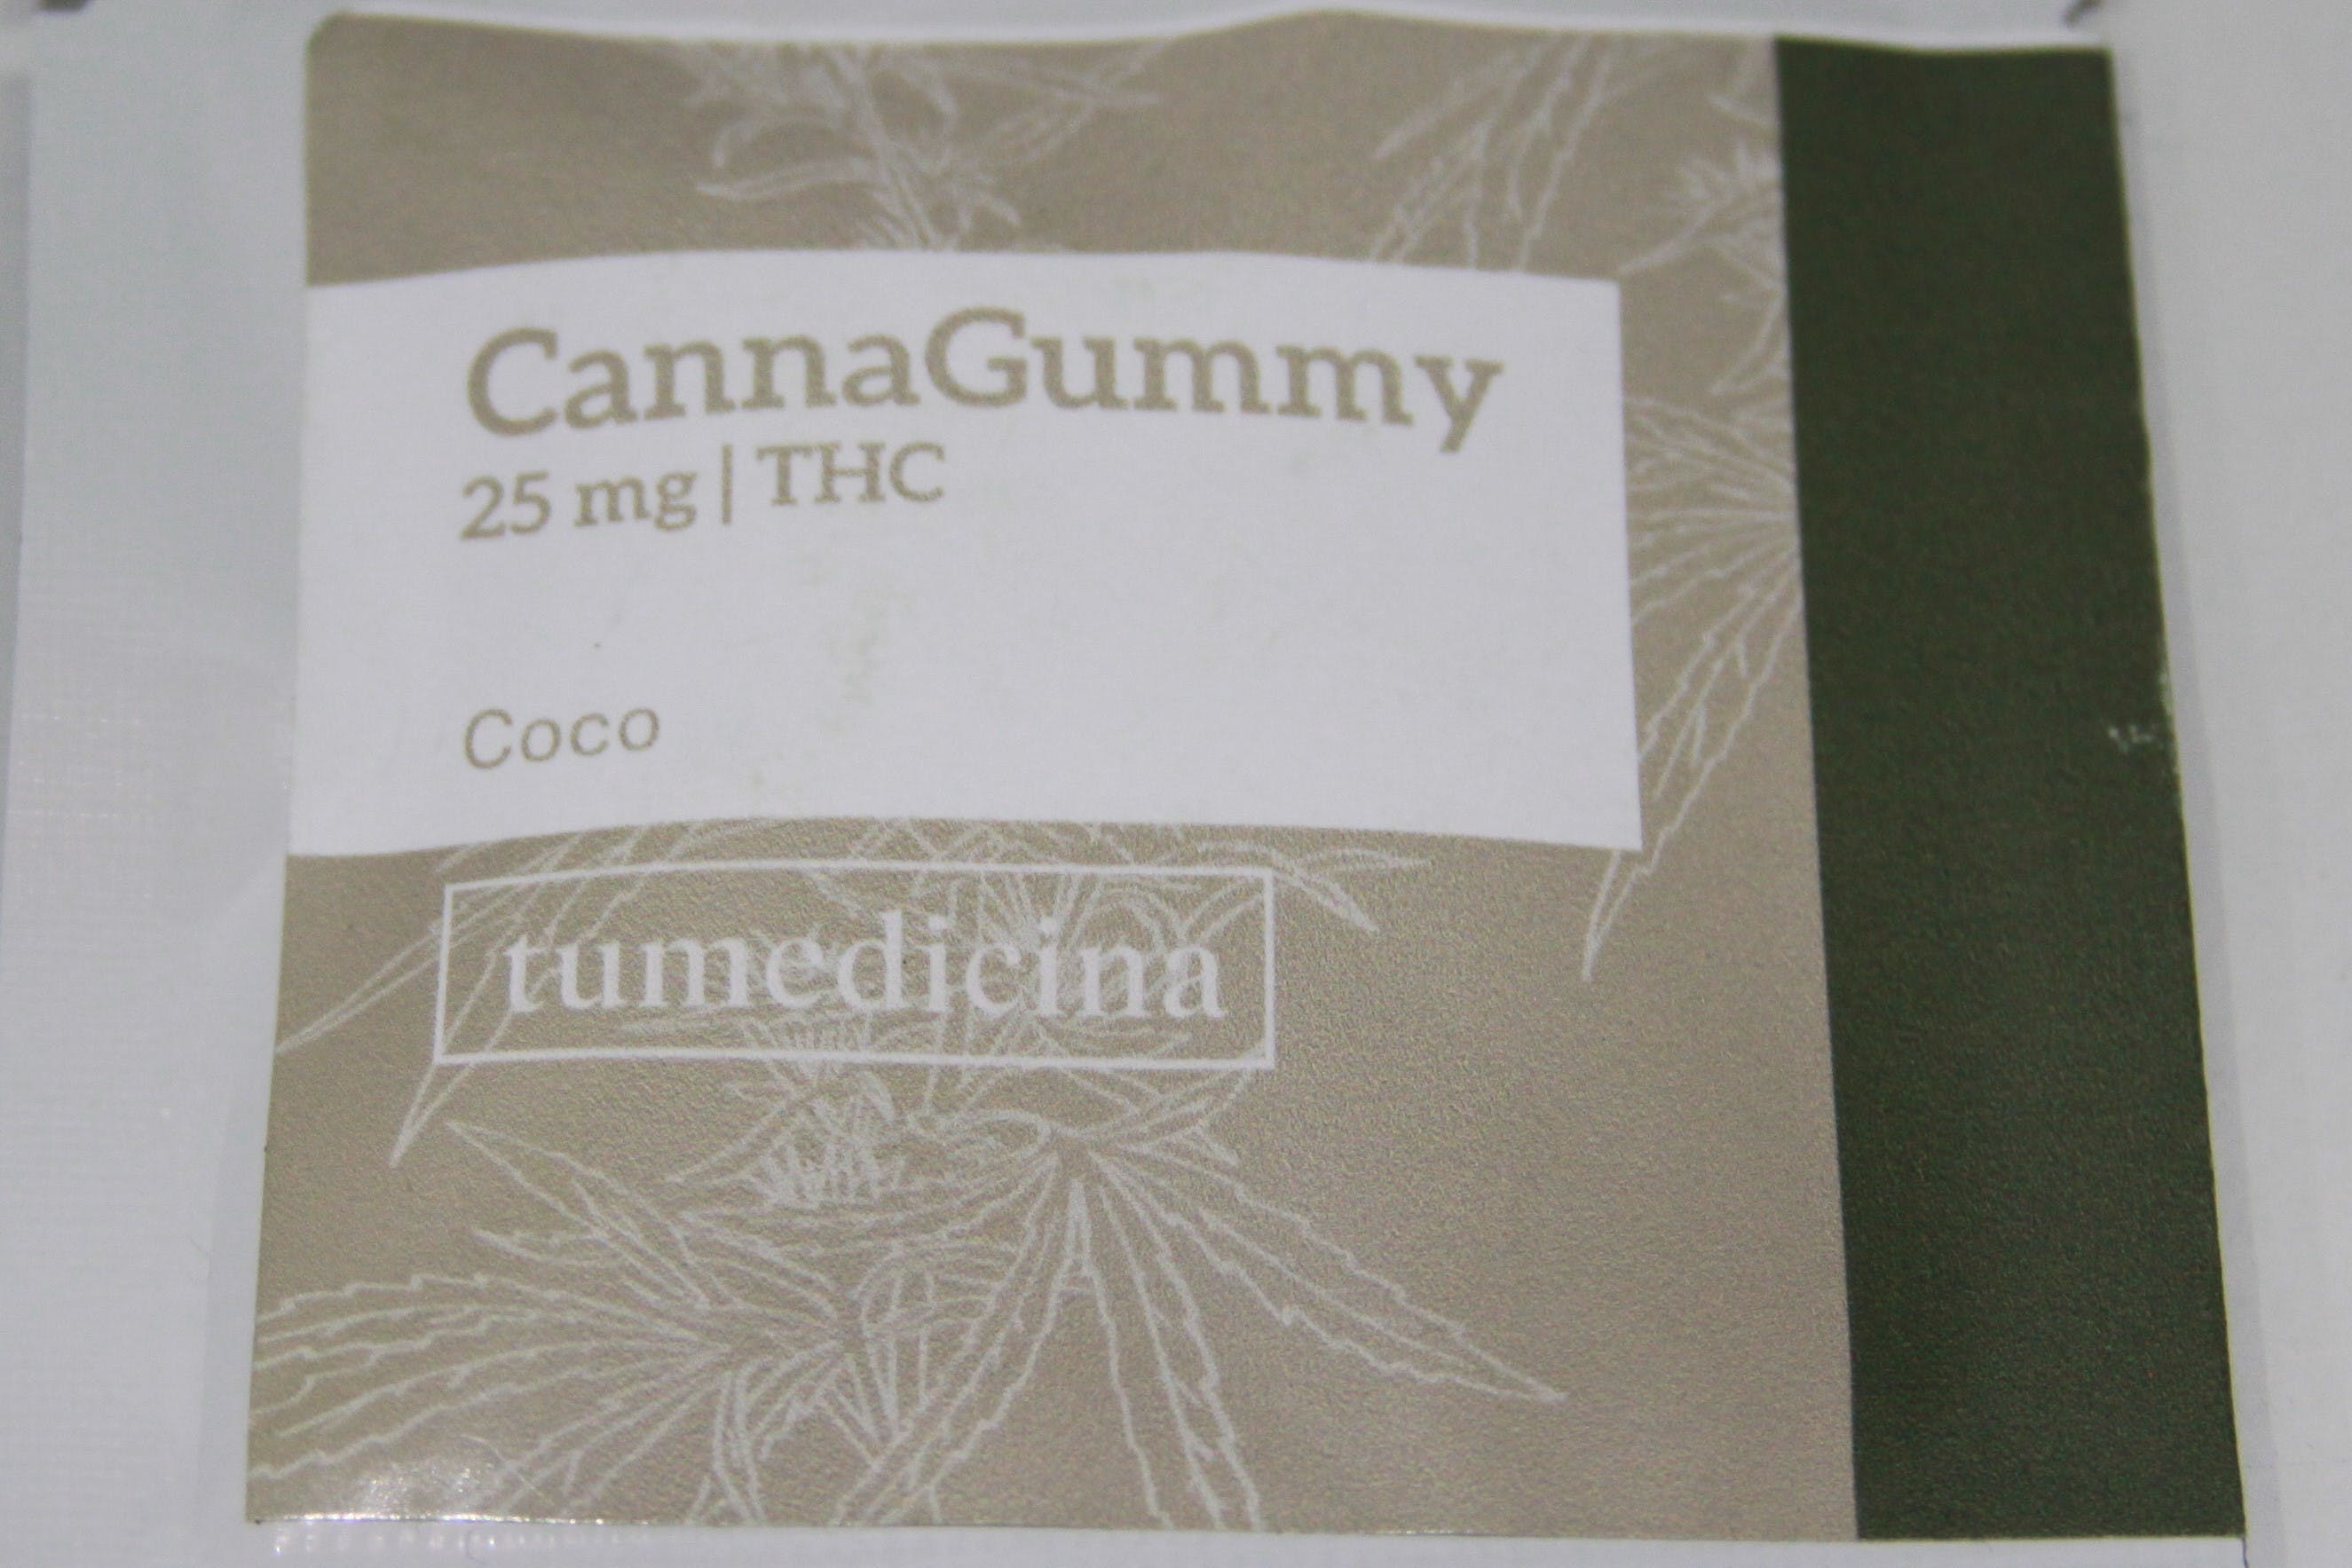 marijuana-dispensaries-sinsemilla-in-san-juan-cannagummy-coco